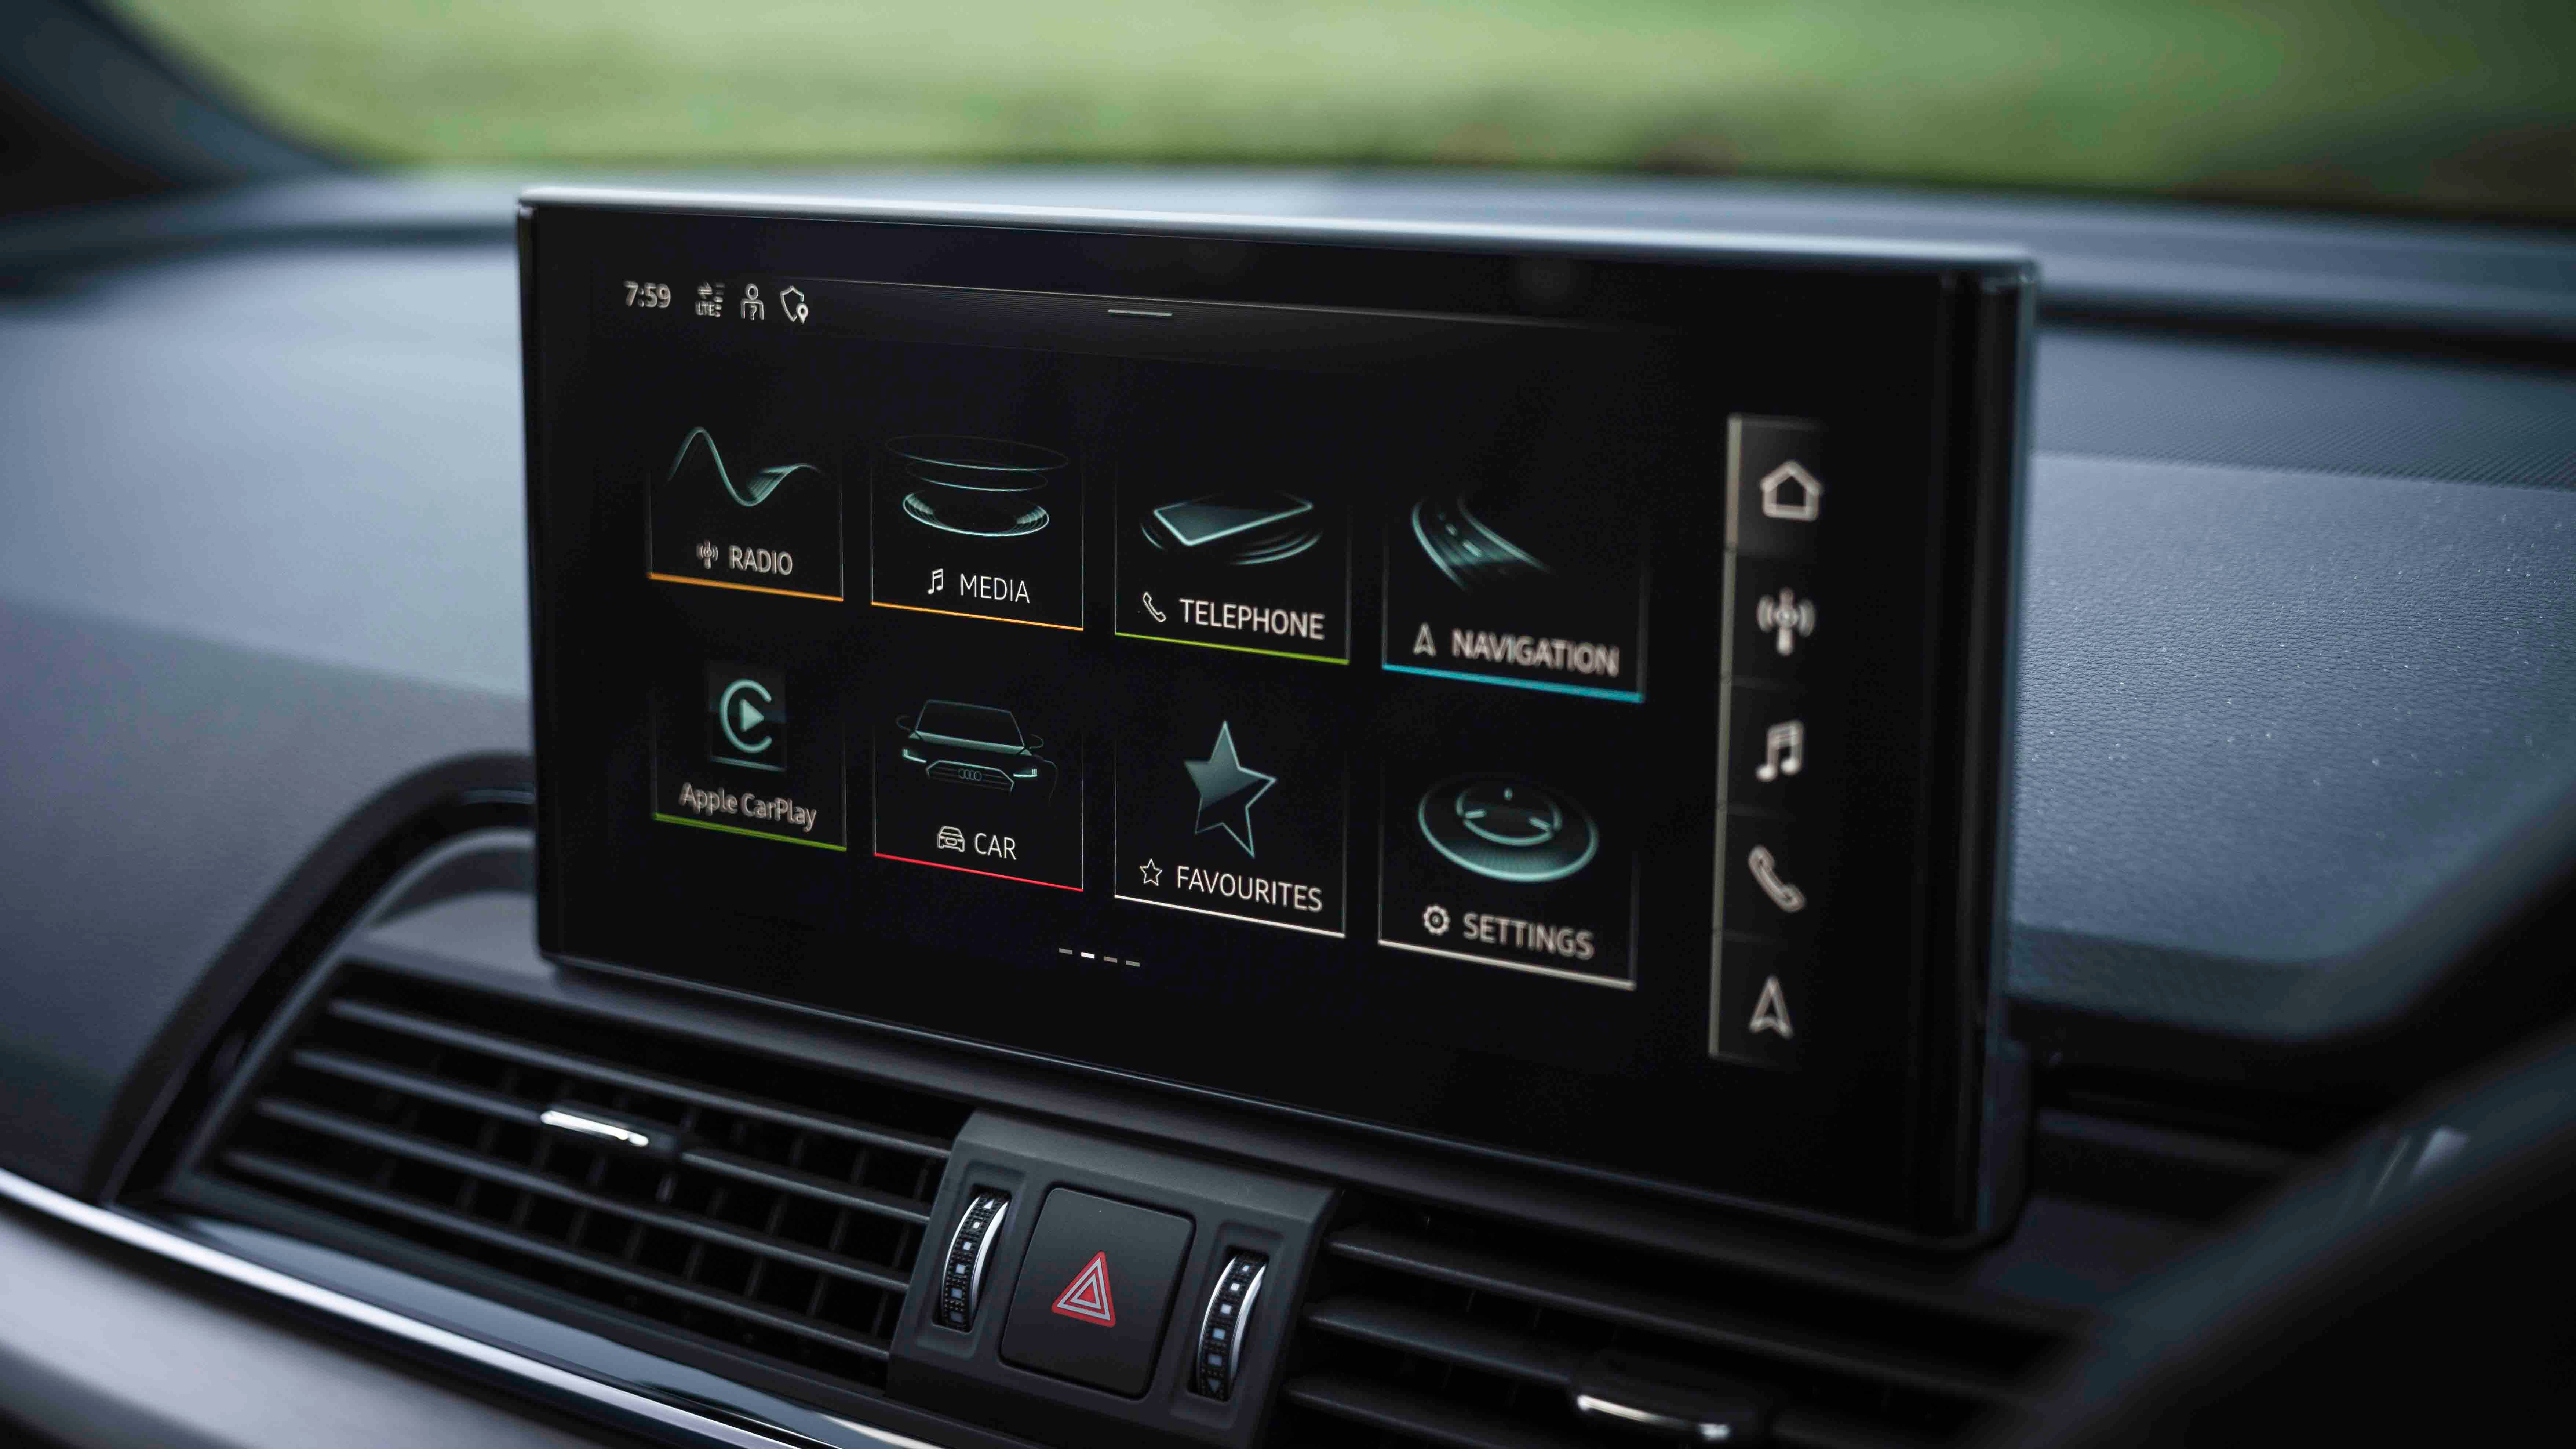 Audi Q5 home screen